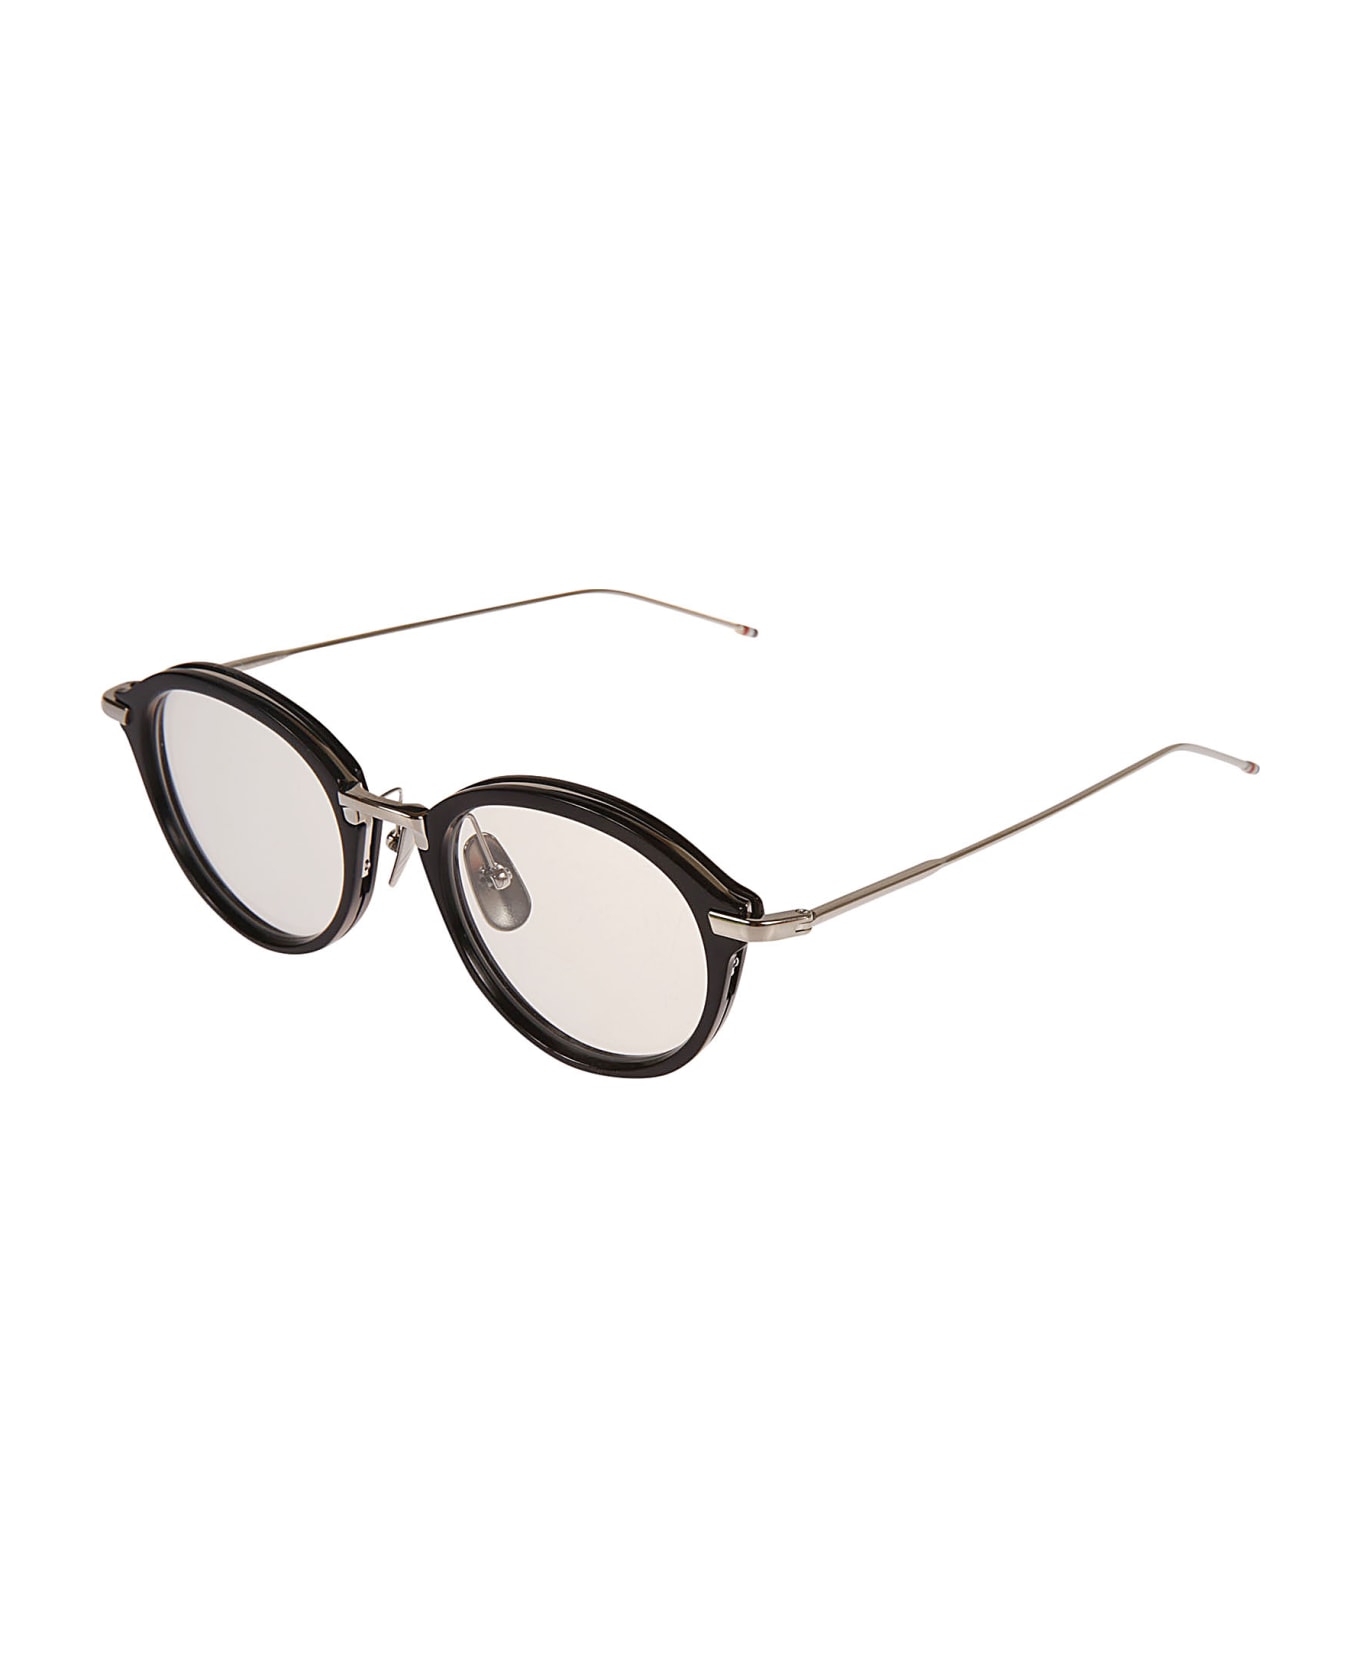 Thom Browne Classic Round Glasses - Navy